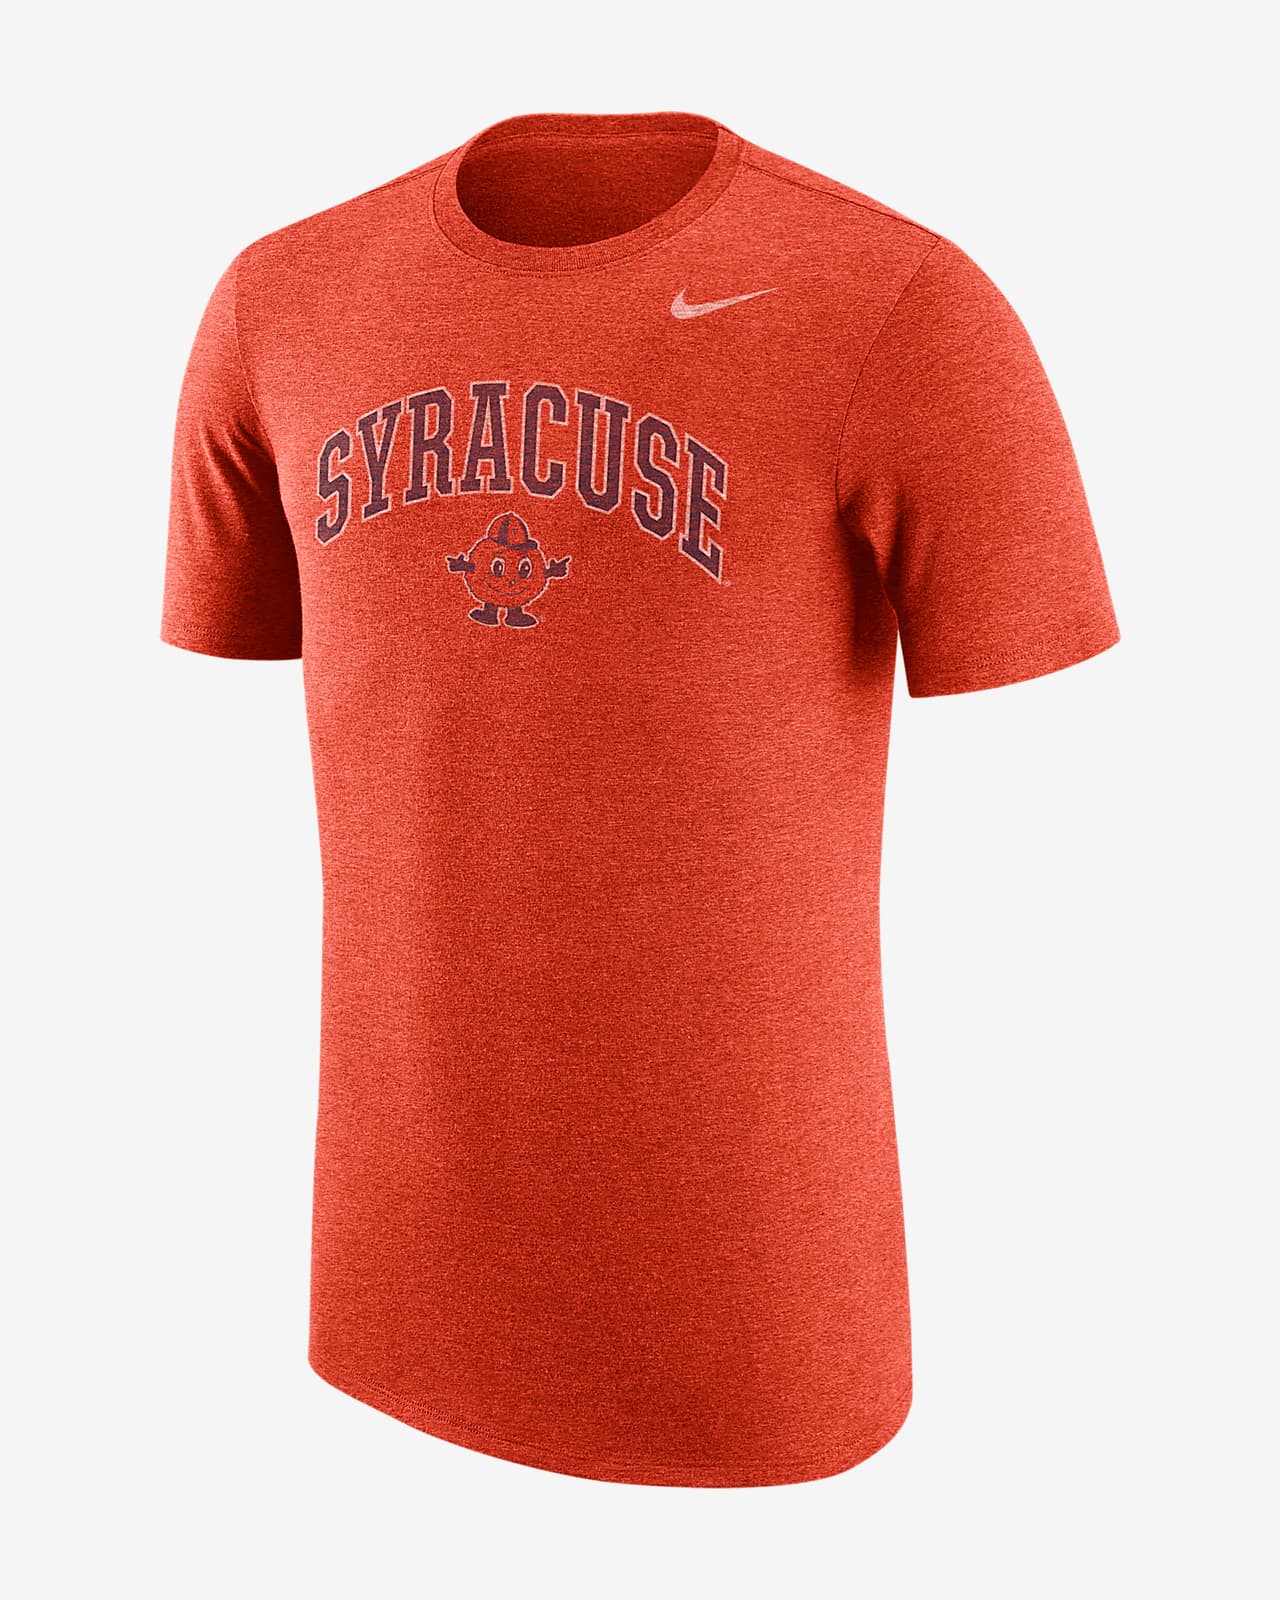 Nike College (Syracuse) Men's T-Shirt. Nike.com